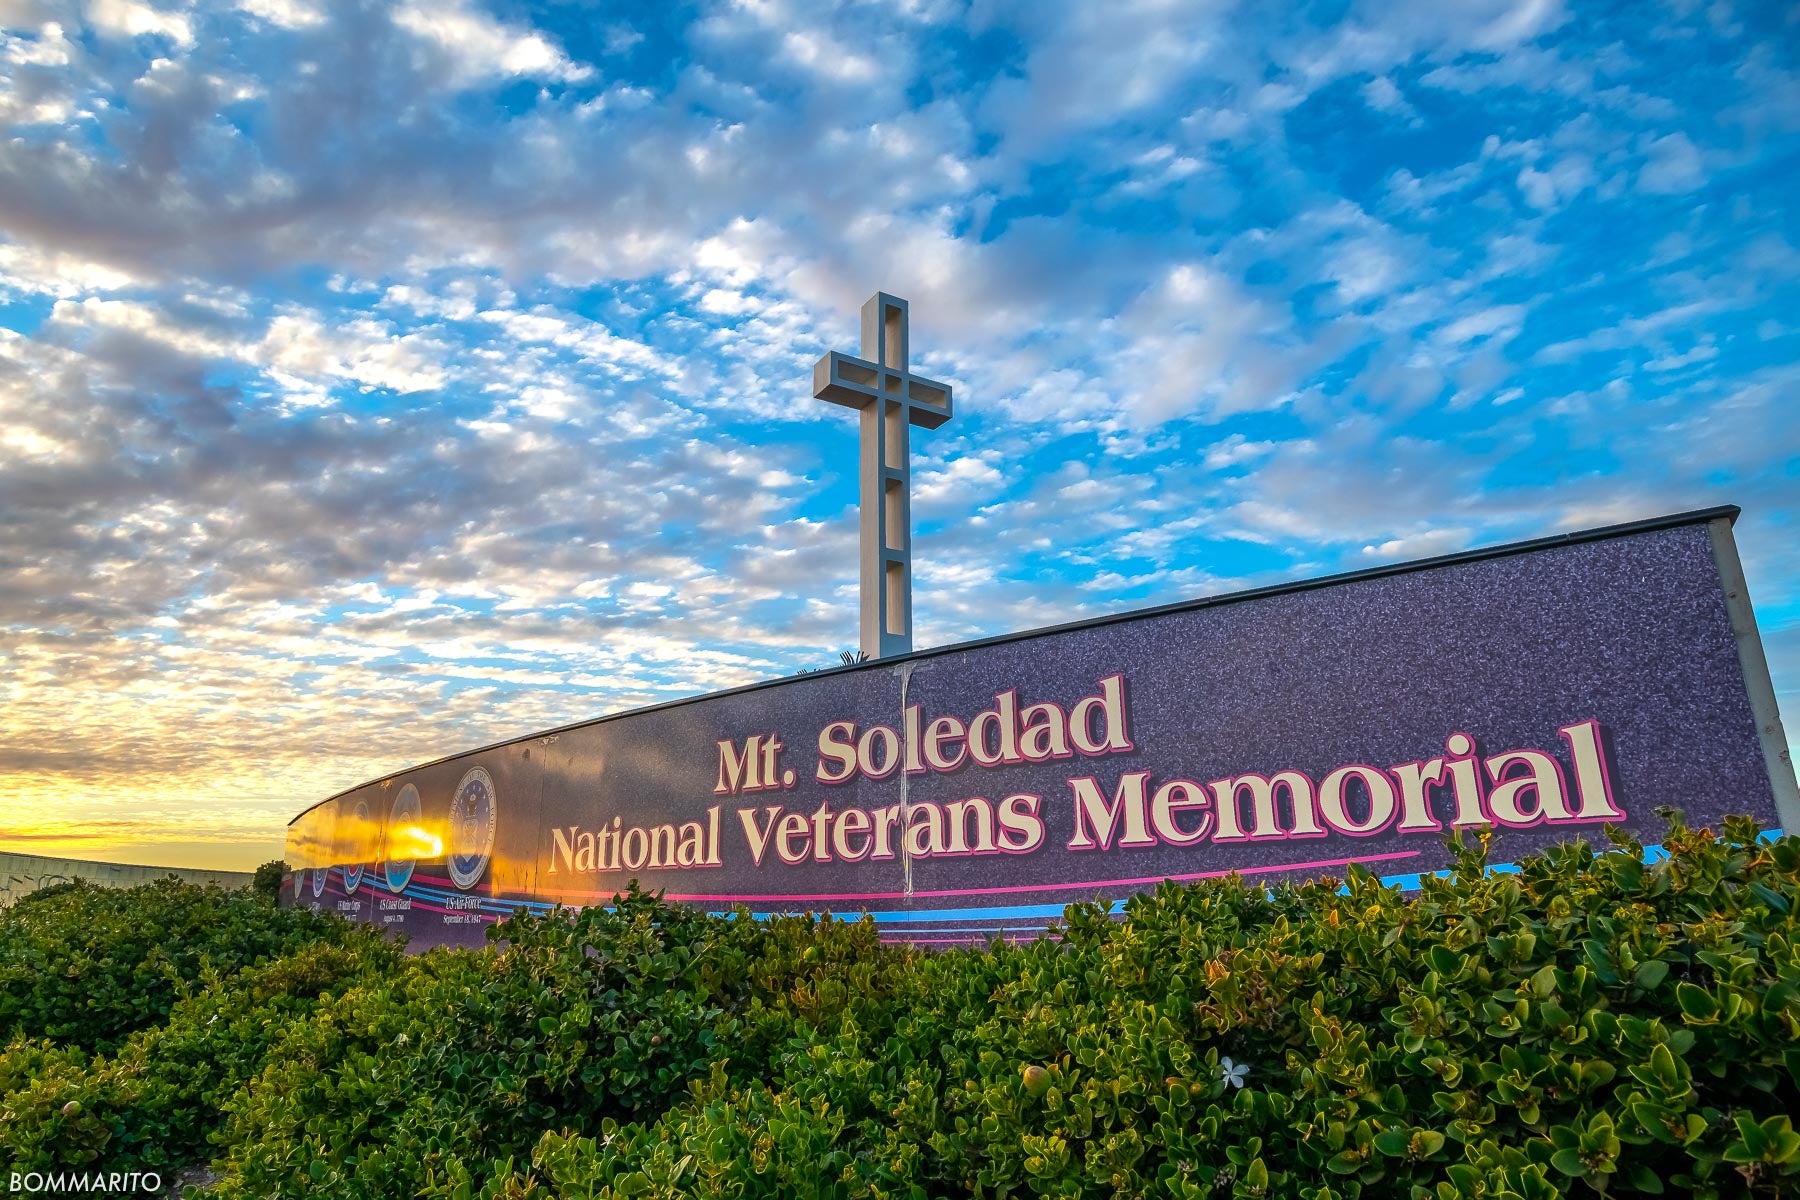 Mt. Soledad